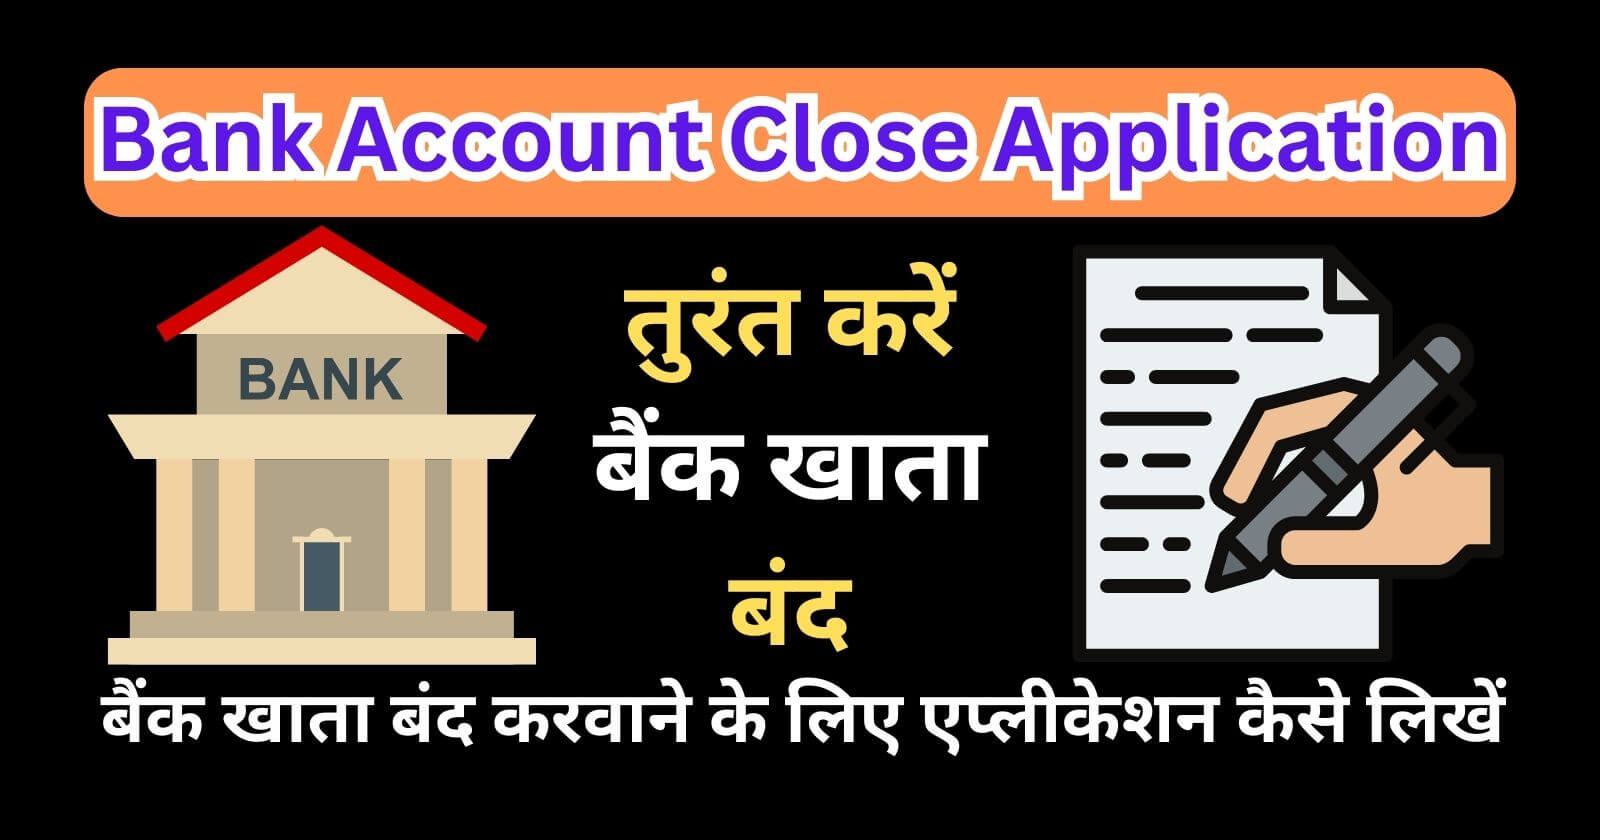 Bank Account Close Application